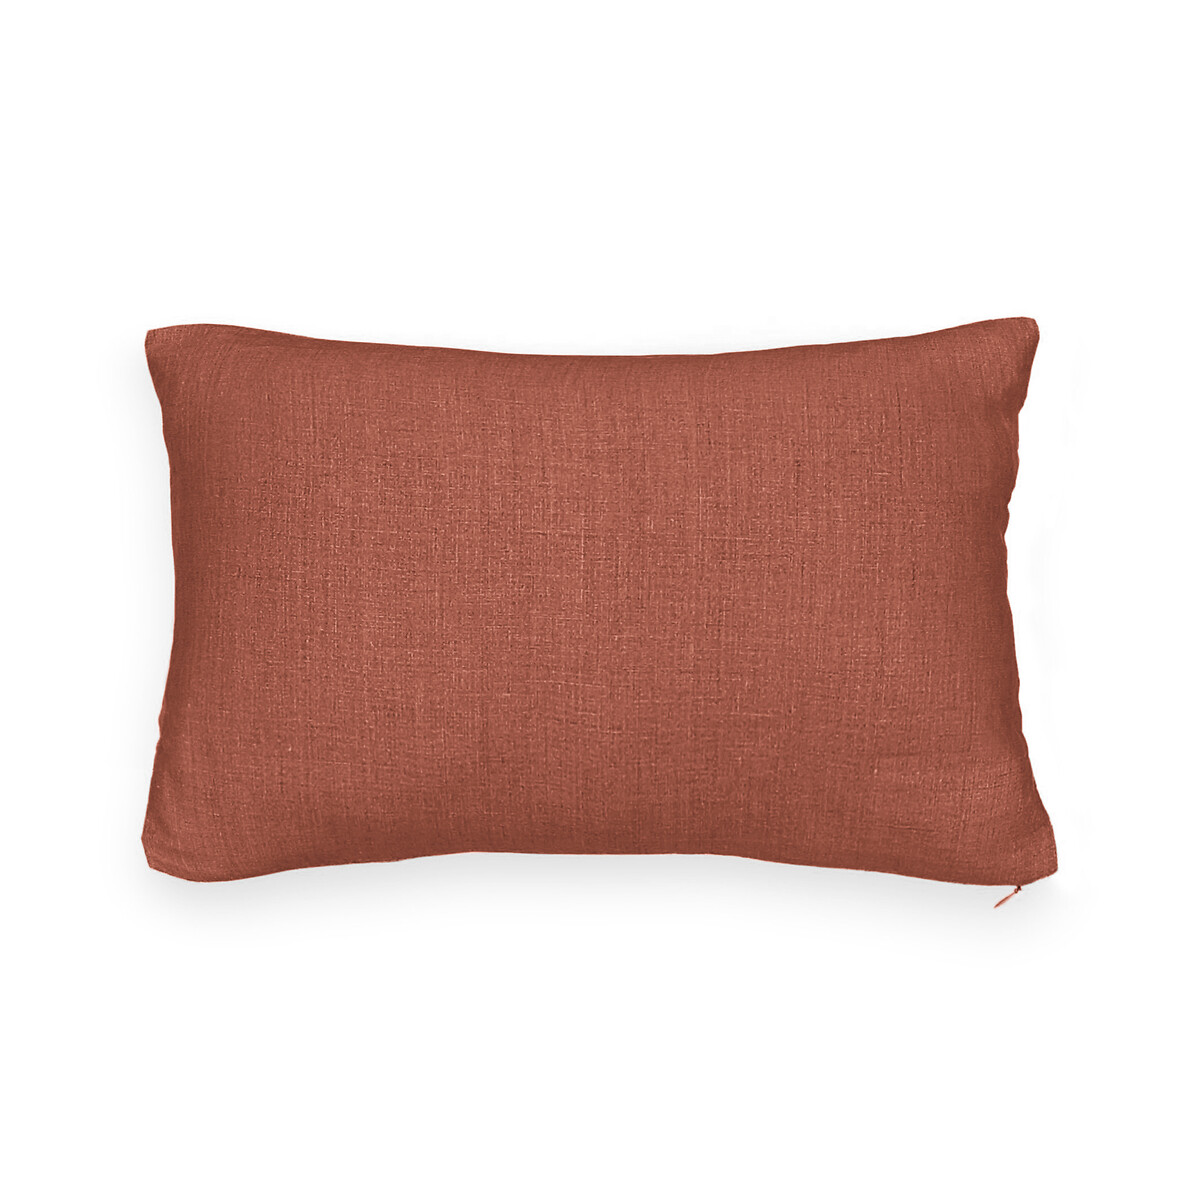 Чехол LA REDOUTE INTERIEURS Для подушки из стираного льна Onega 40 x 40 см каштановый, размер 40 x 40 см - фото 2